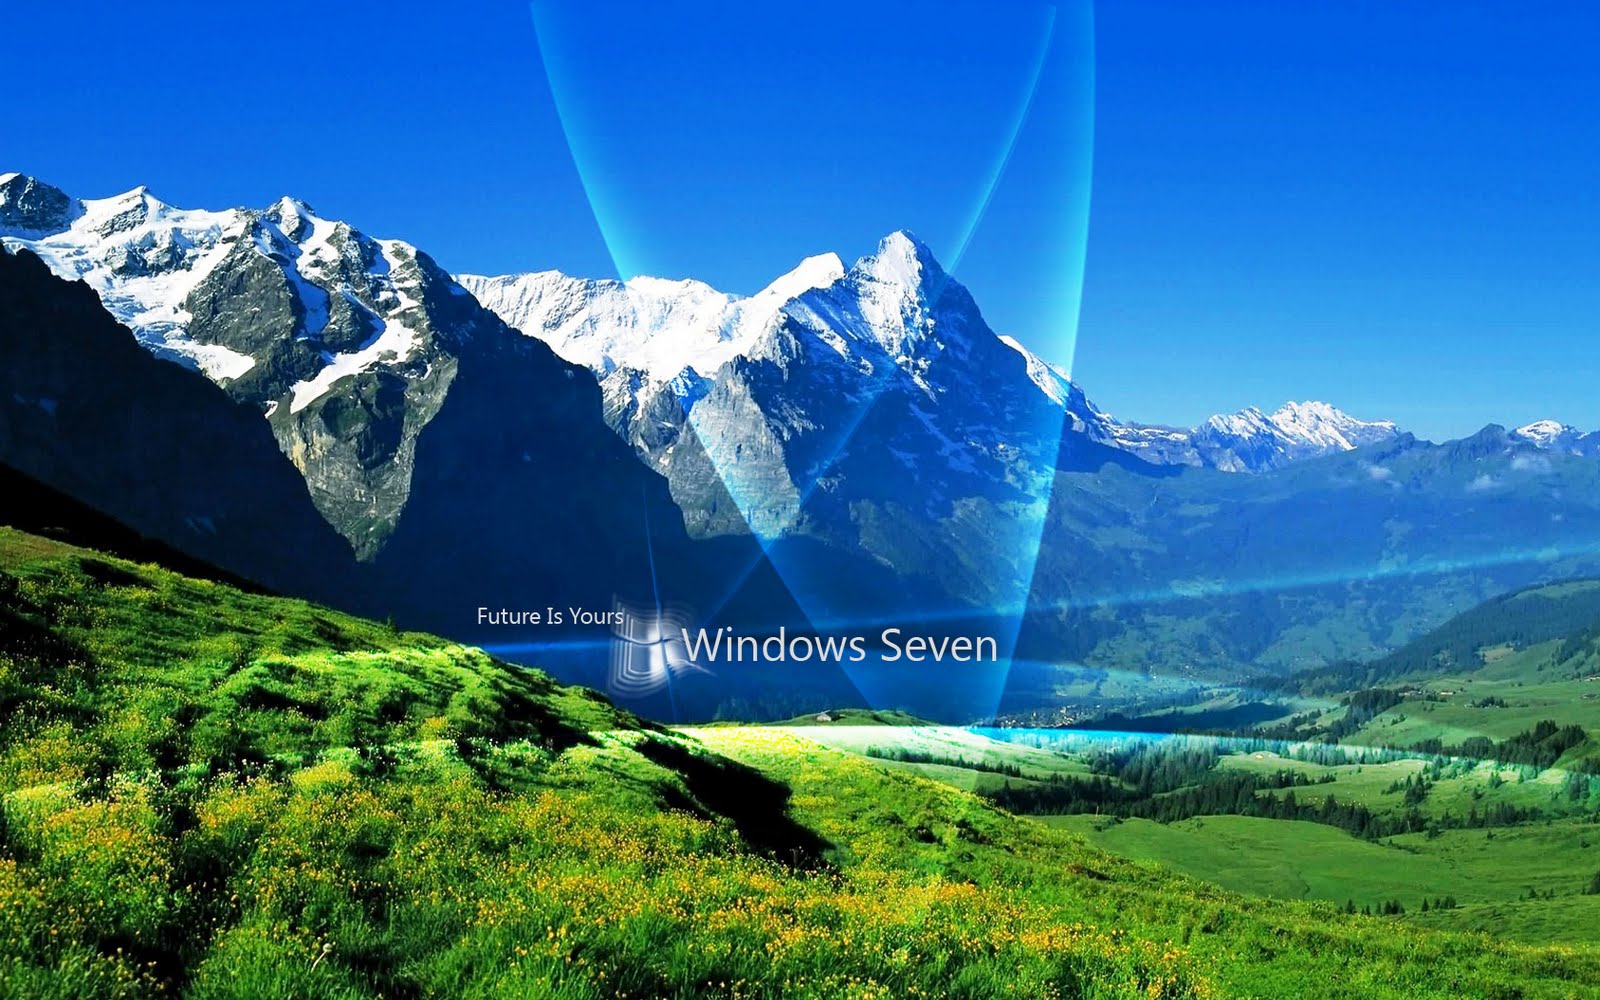 Panoramic Wallpaper Of Windows 7 Images Gallery HD Wallpapers Download Free Map Images Wallpaper [wallpaper376.blogspot.com]